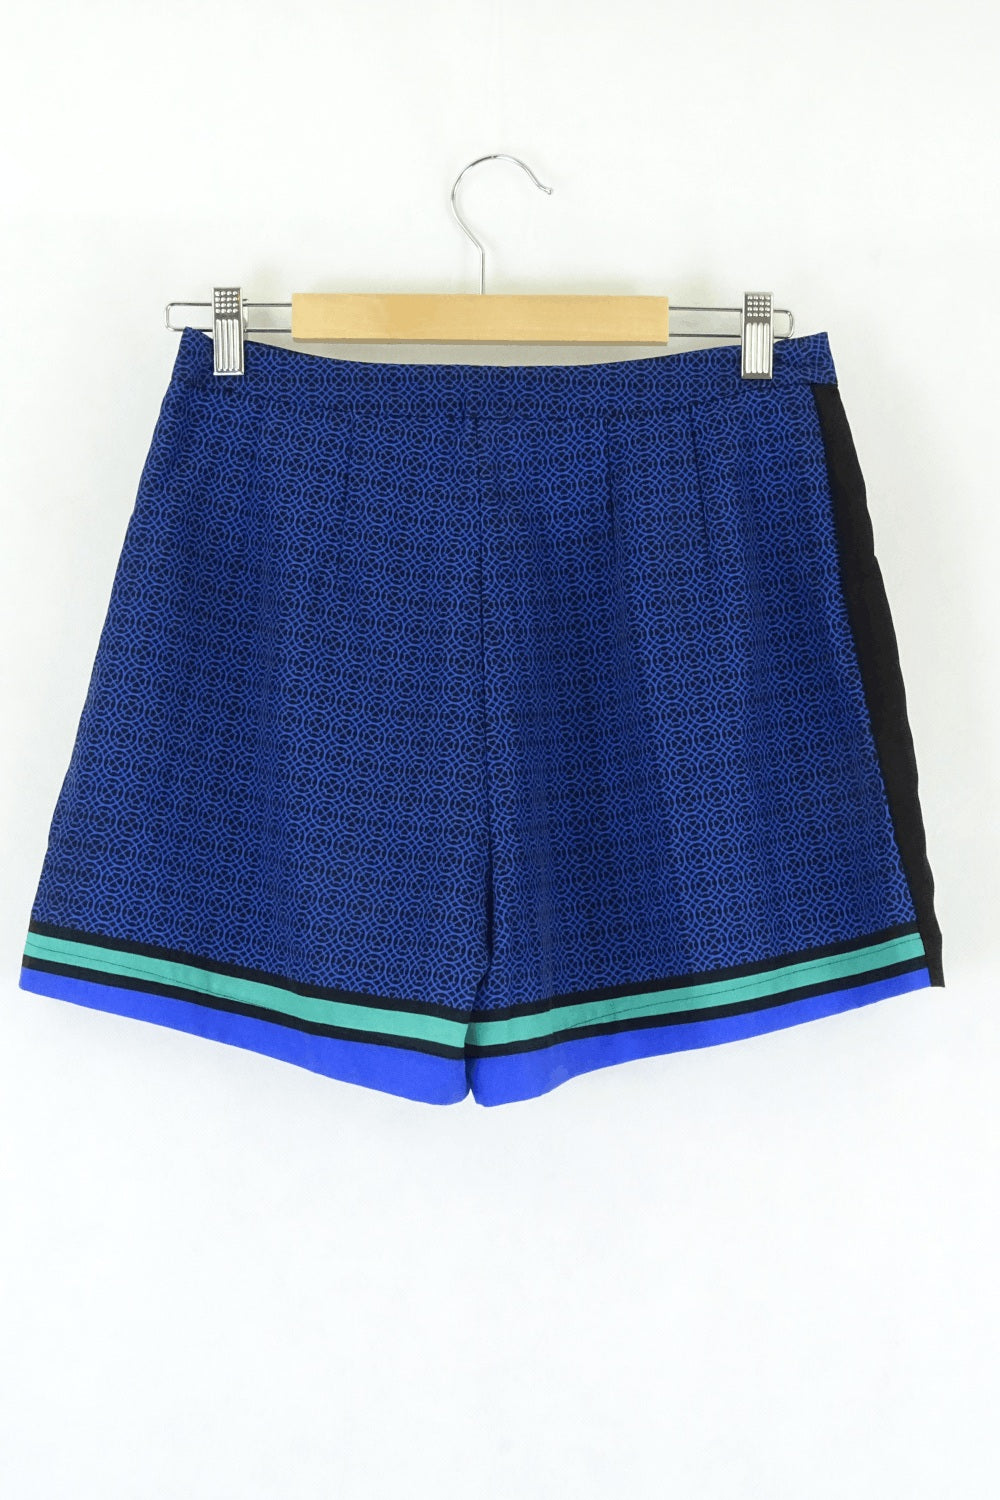 Piper Blue Shorts 10